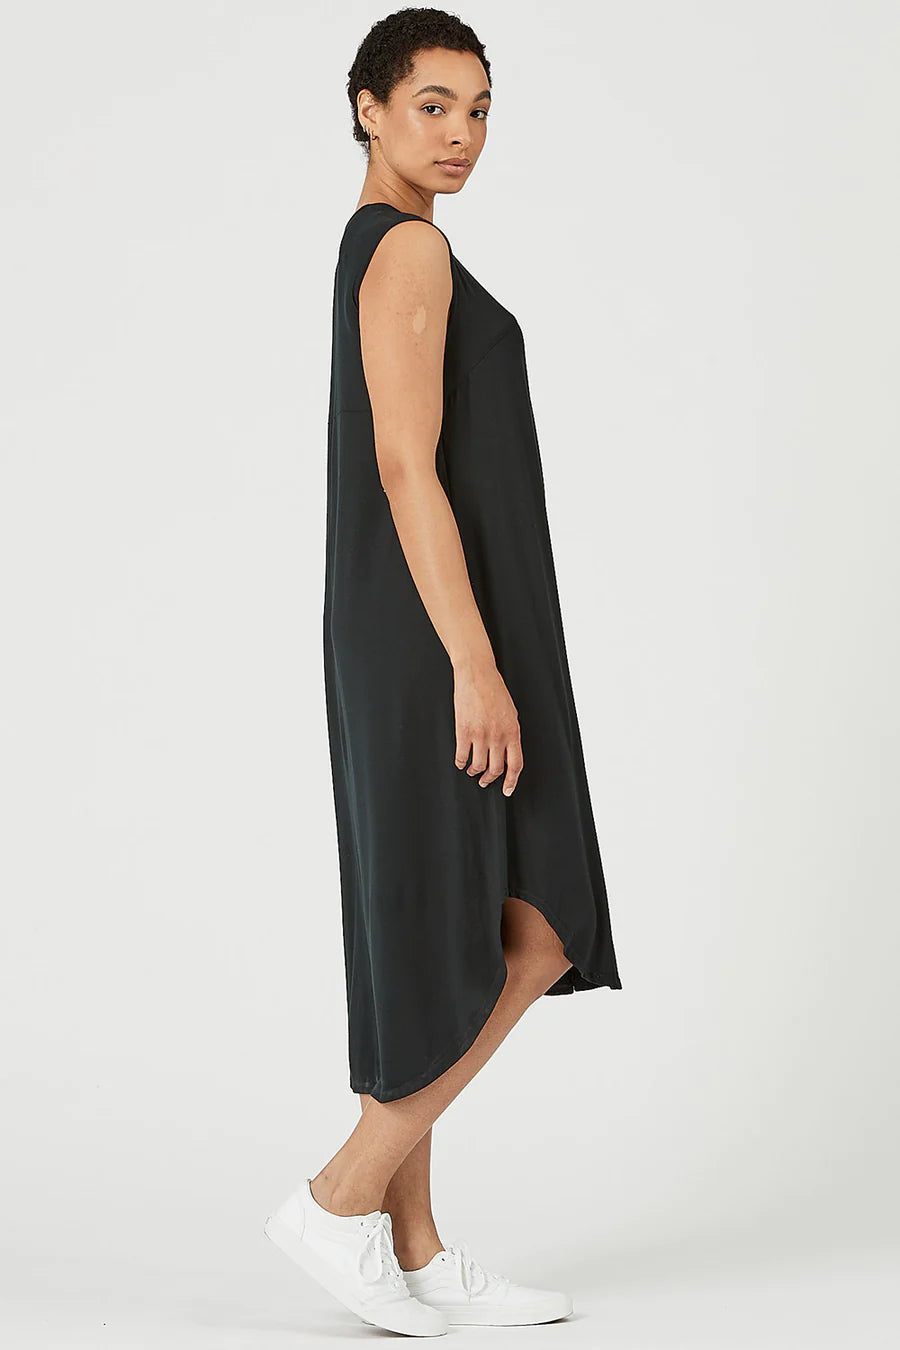 Aiken Dress by Advika, Black, tank dress, high neck, curved hem, tencel, organic, cotton, eco-fabric, sizes S to XXL, made in Montreal